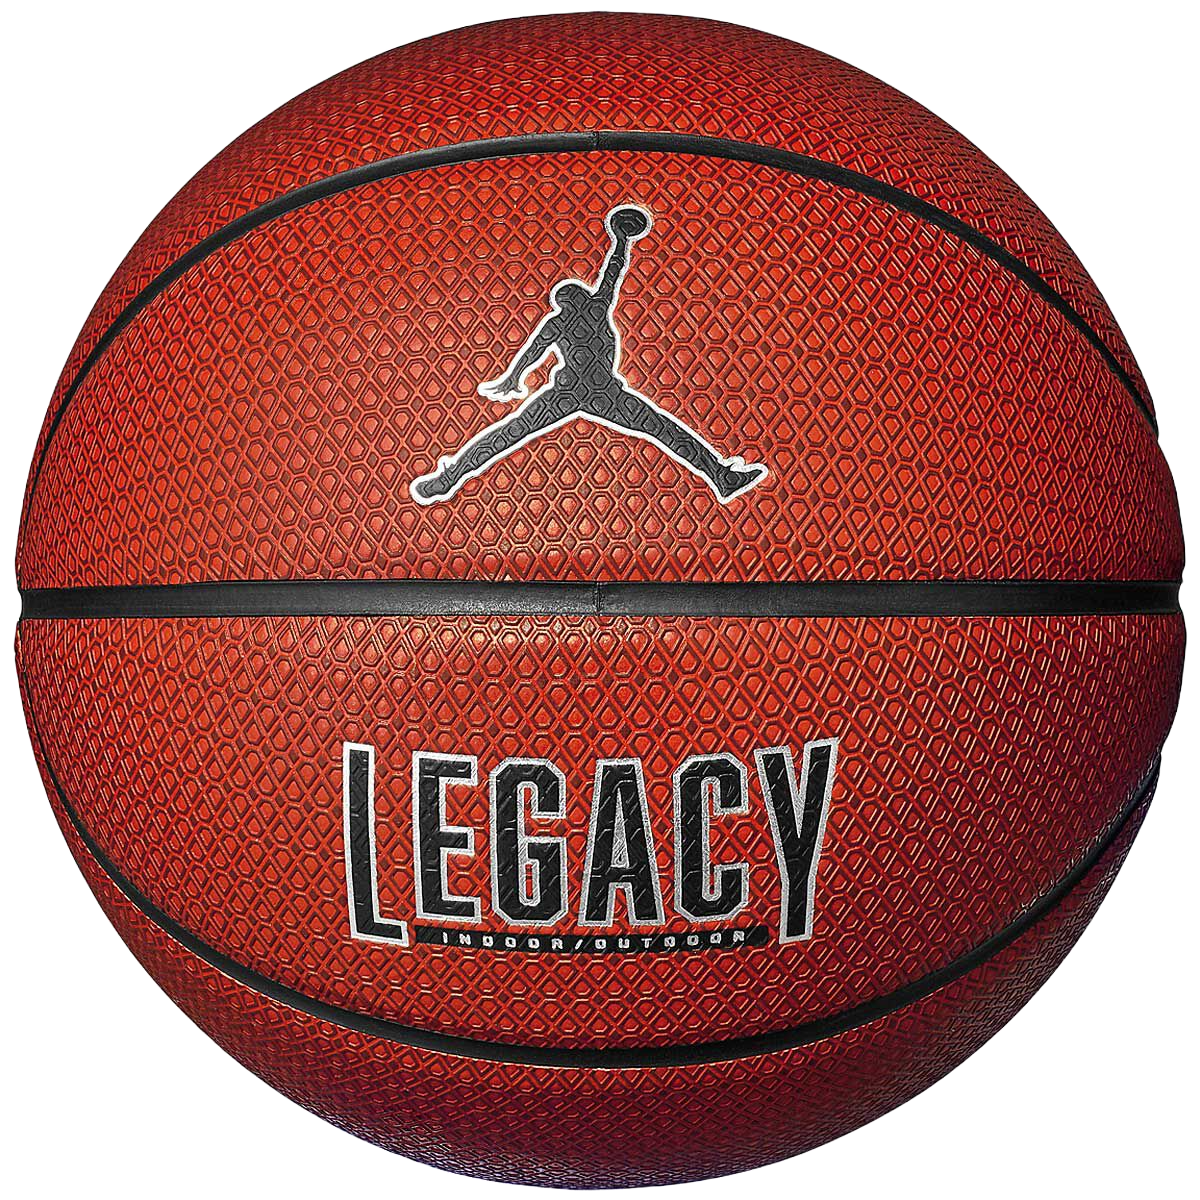 Jordan Basketball Legacy 2.0